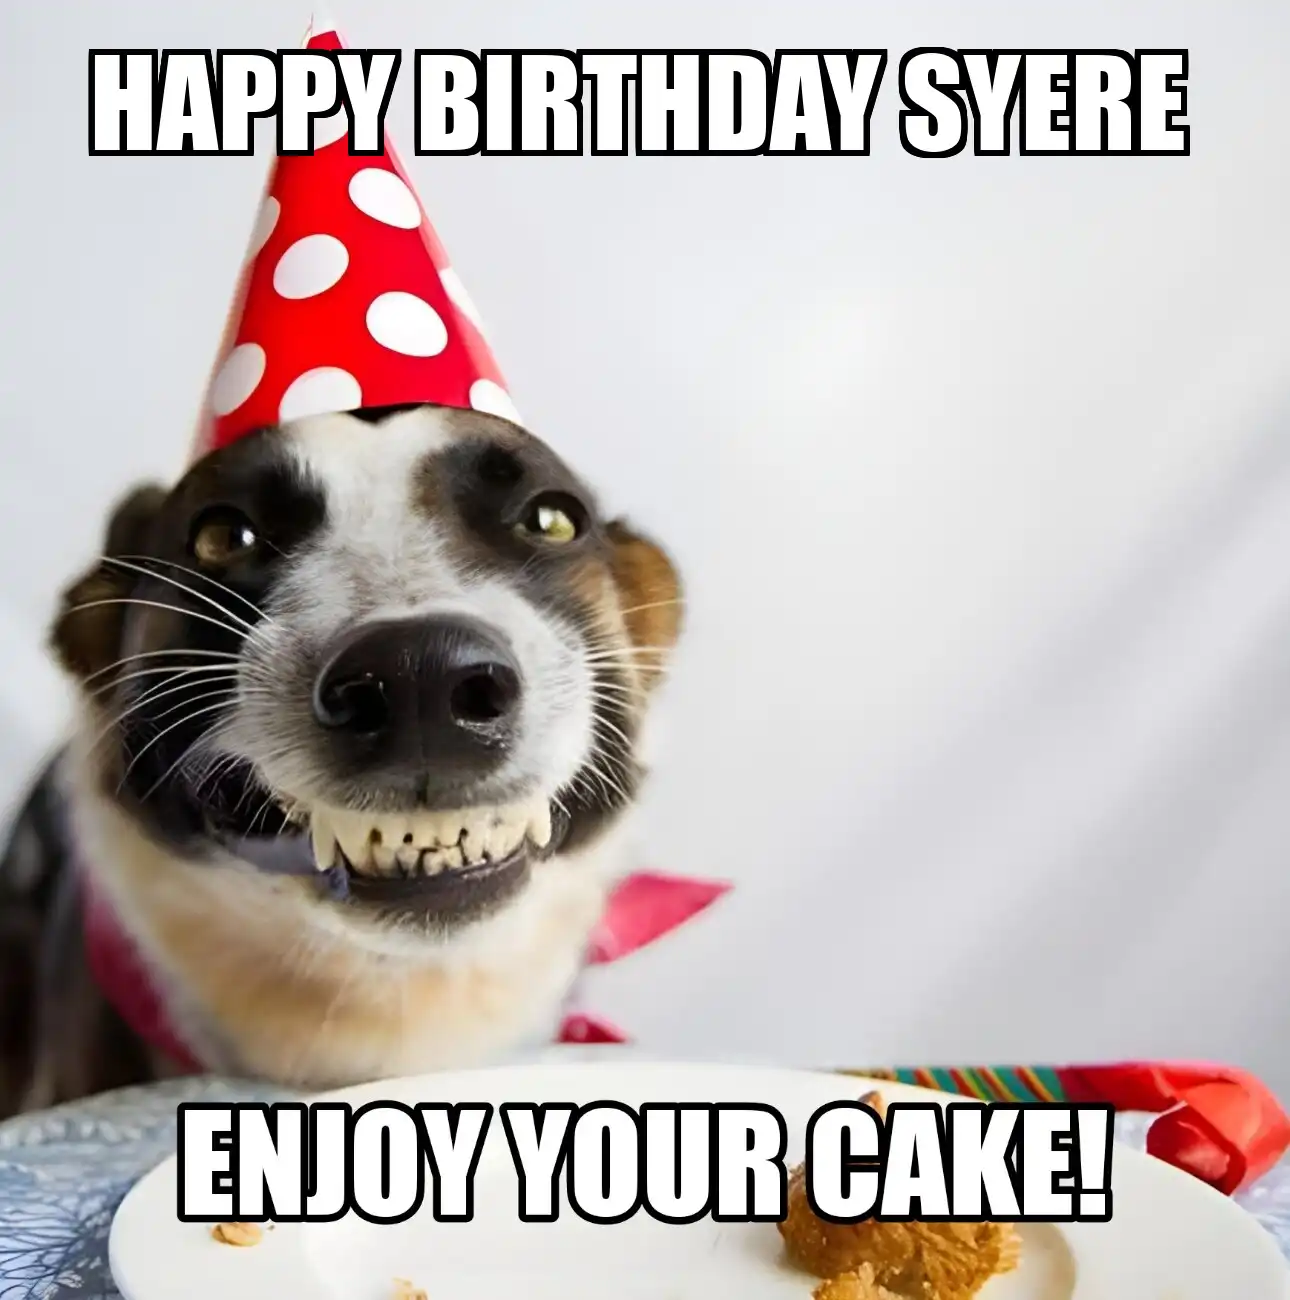 Happy Birthday Syere Enjoy Your Cake Dog Meme